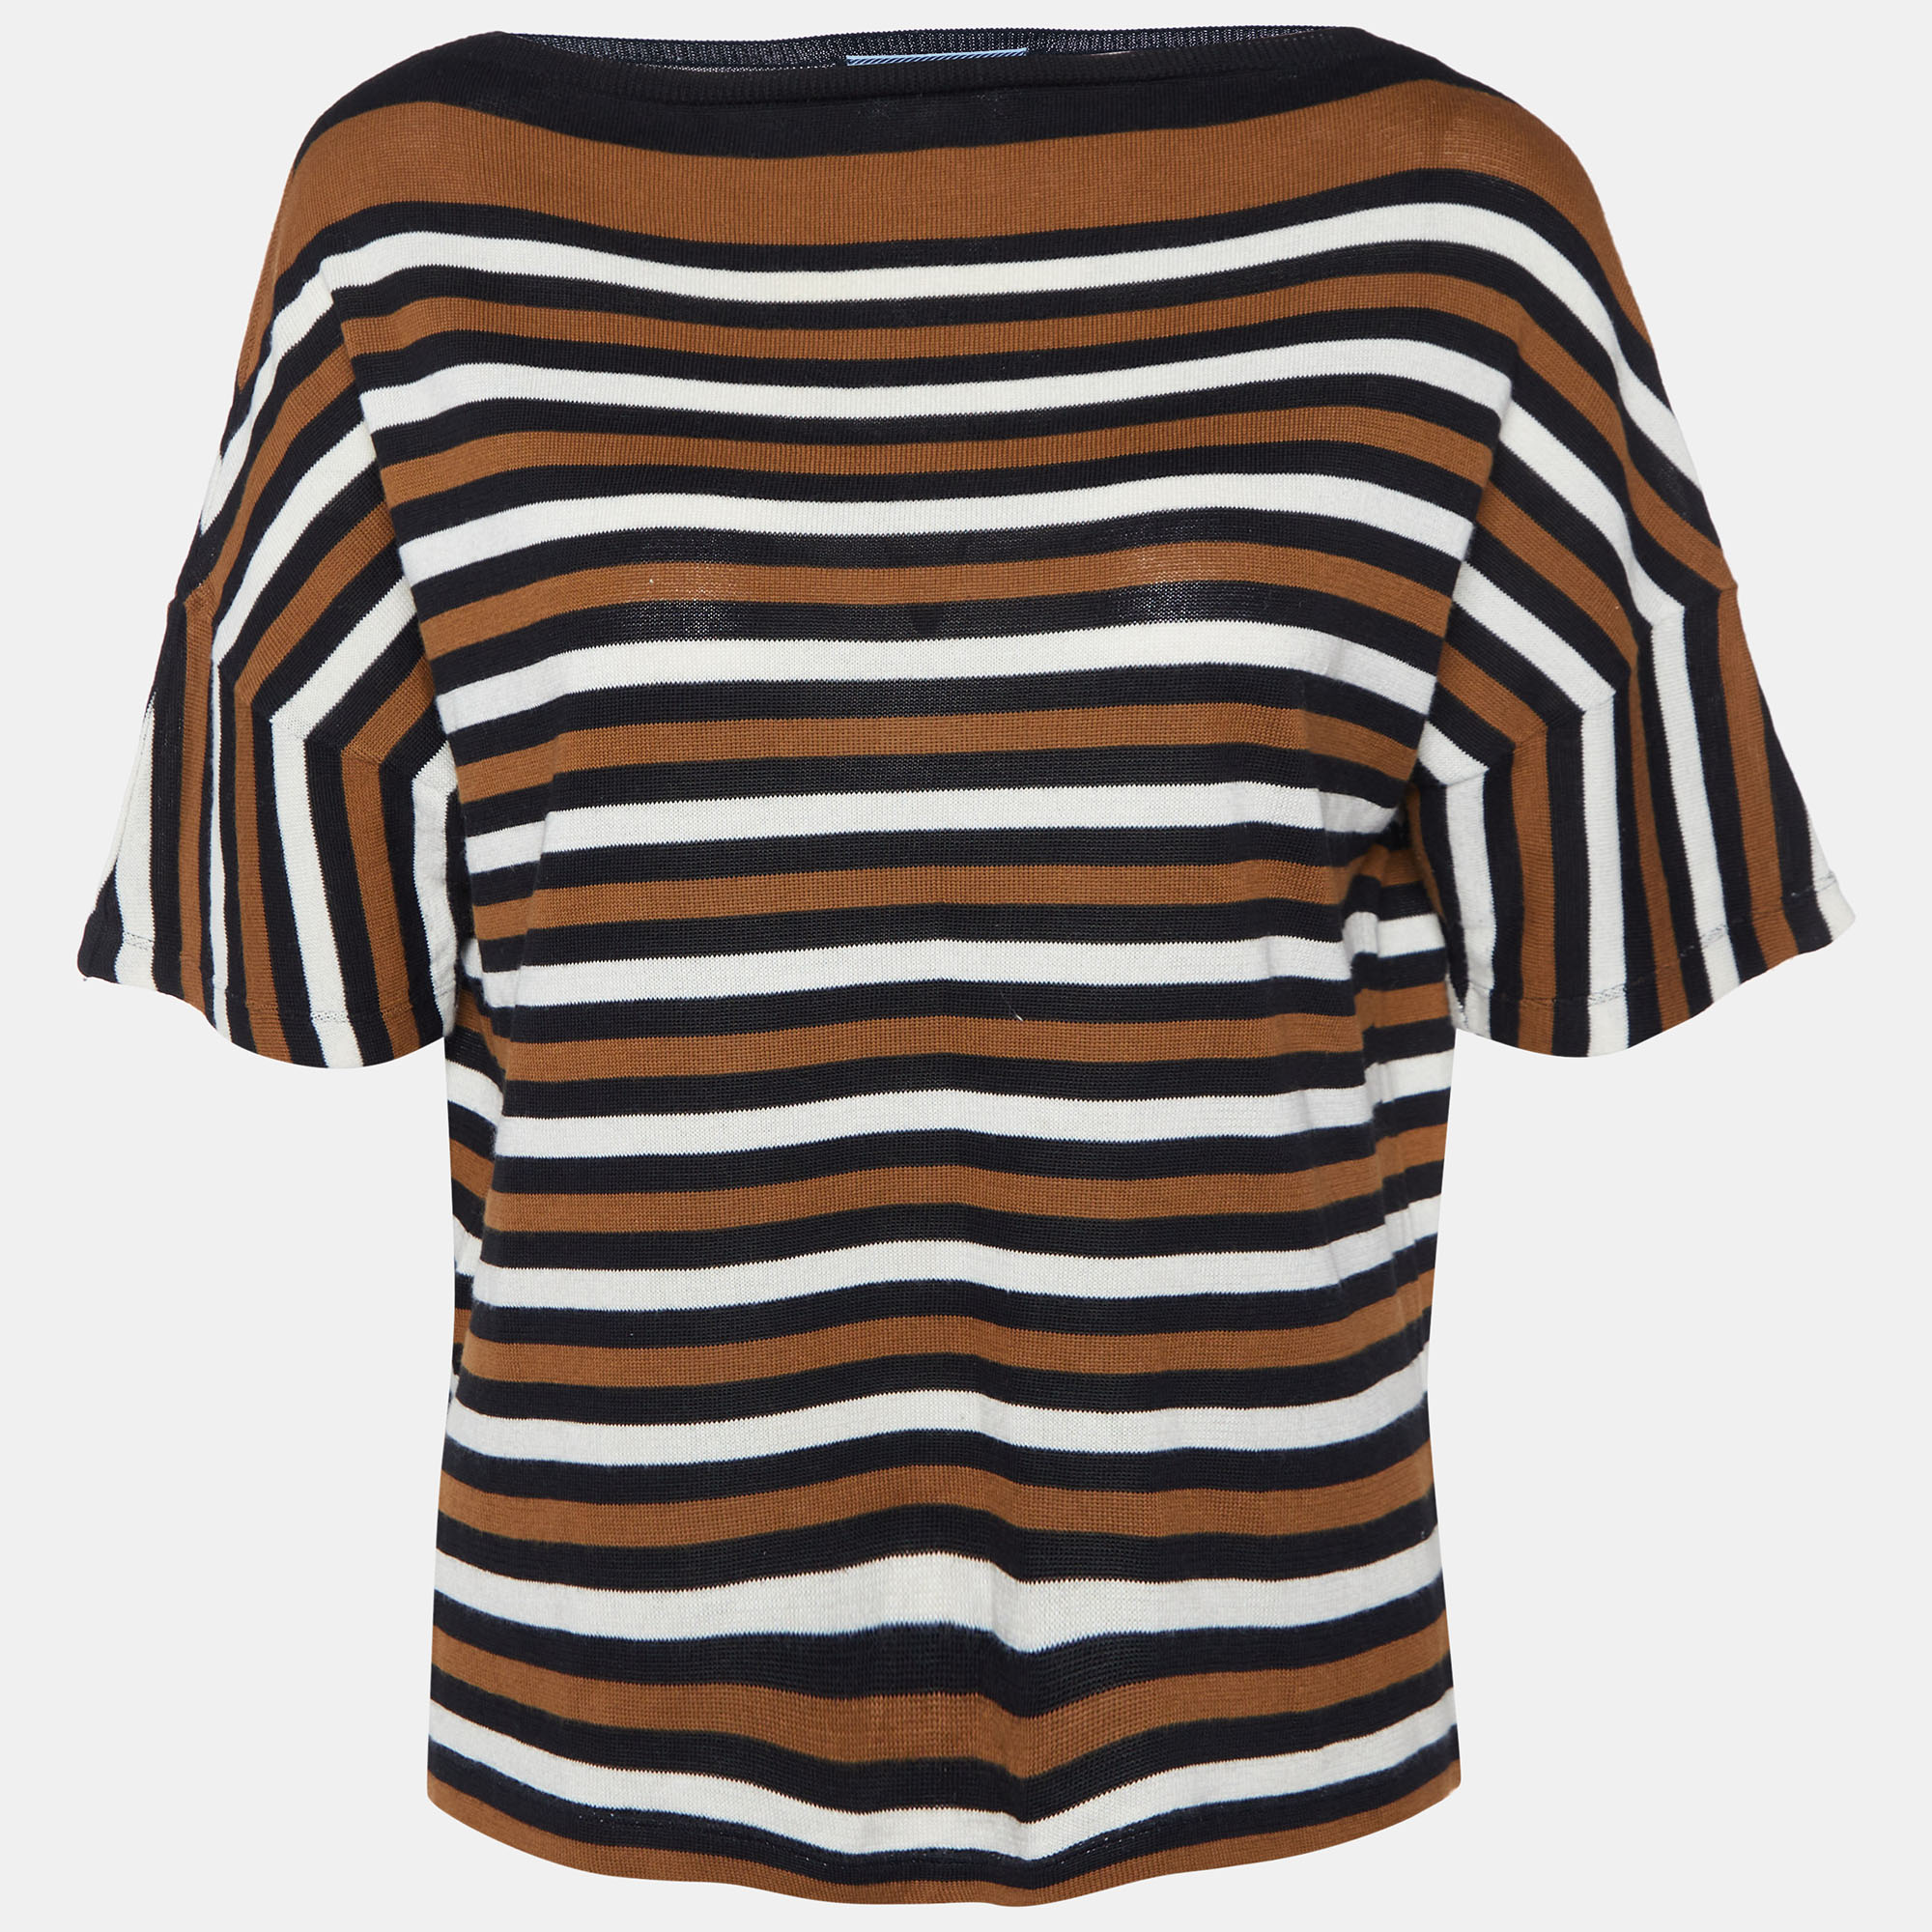 Prada brown/black striped cotton knit short sleeve top m